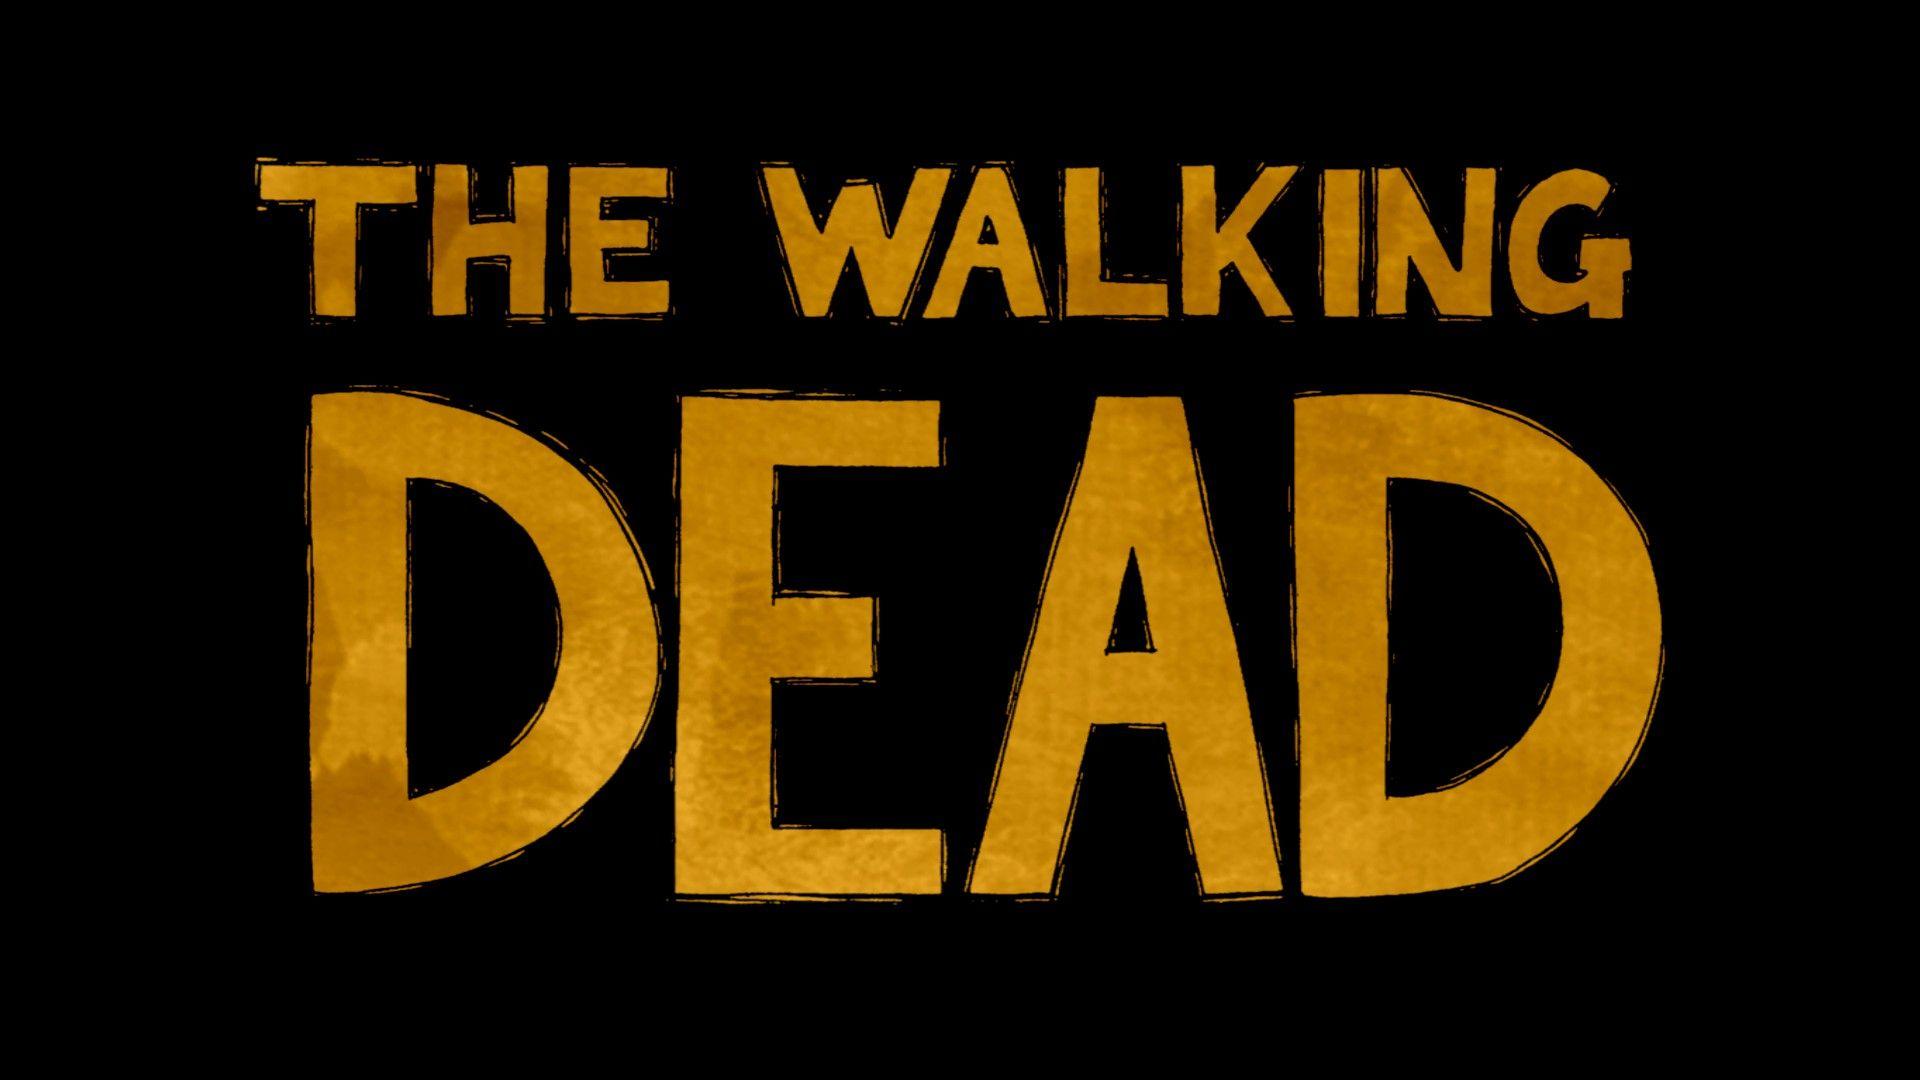 The Walking Dead Computer Wallpaper, Desktop Background